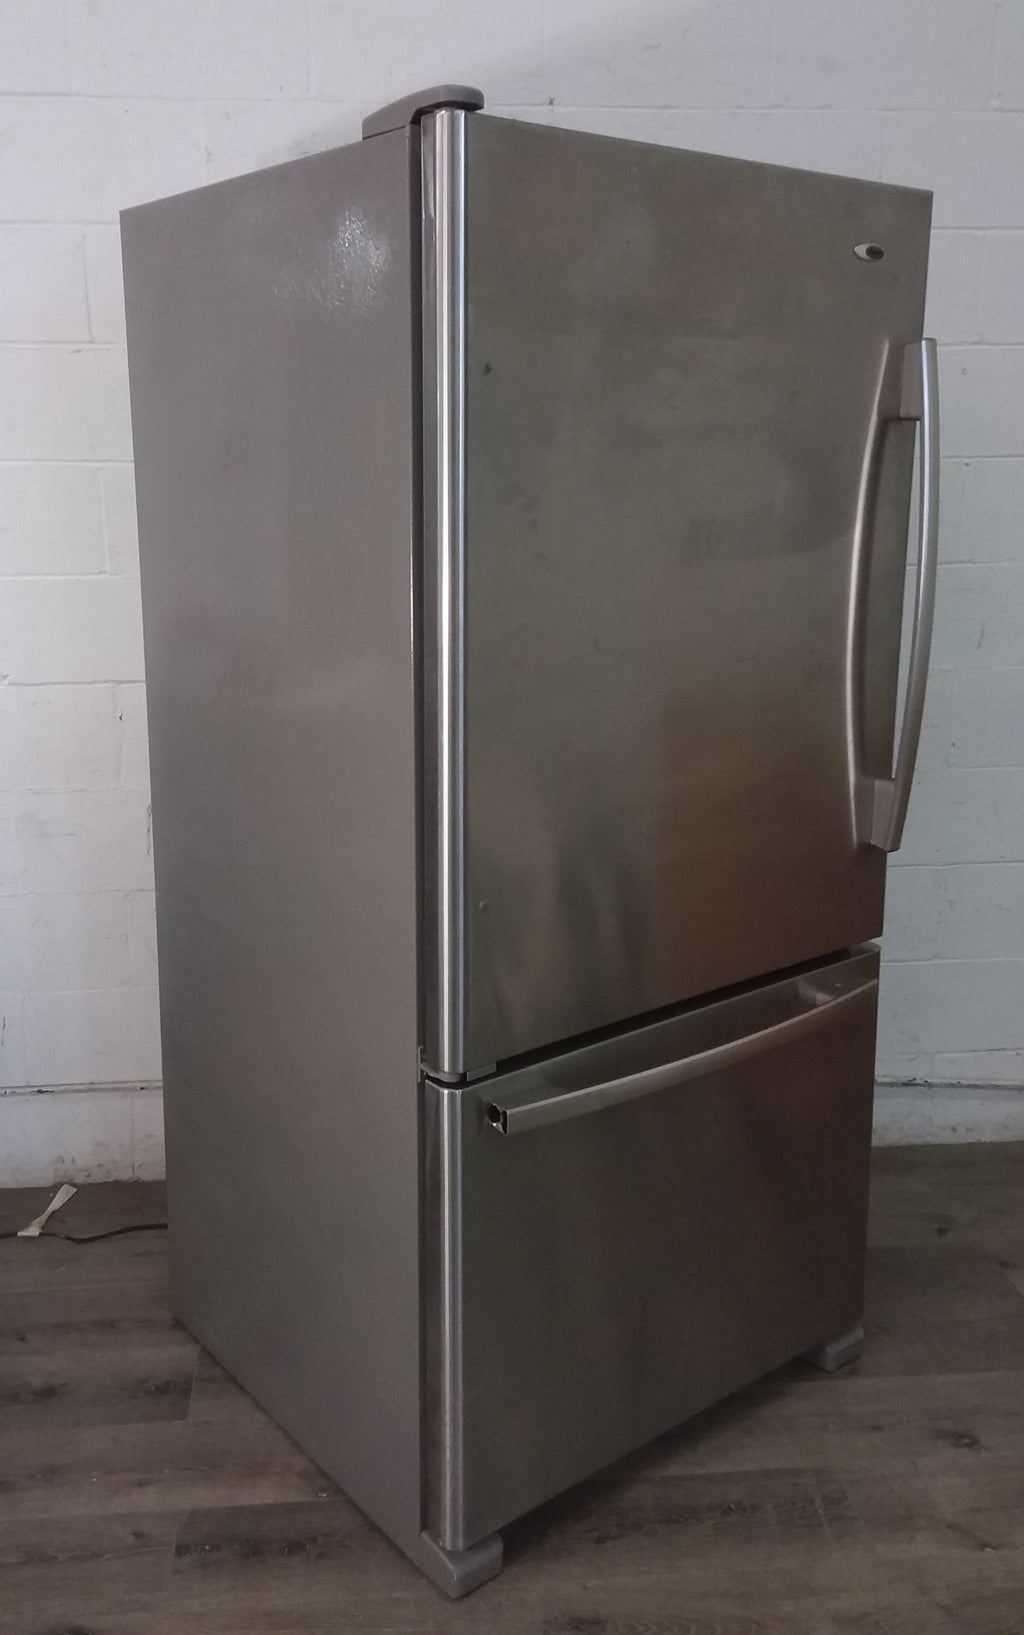 Stainless Steel Amana Bottom Freezer Refrigerator